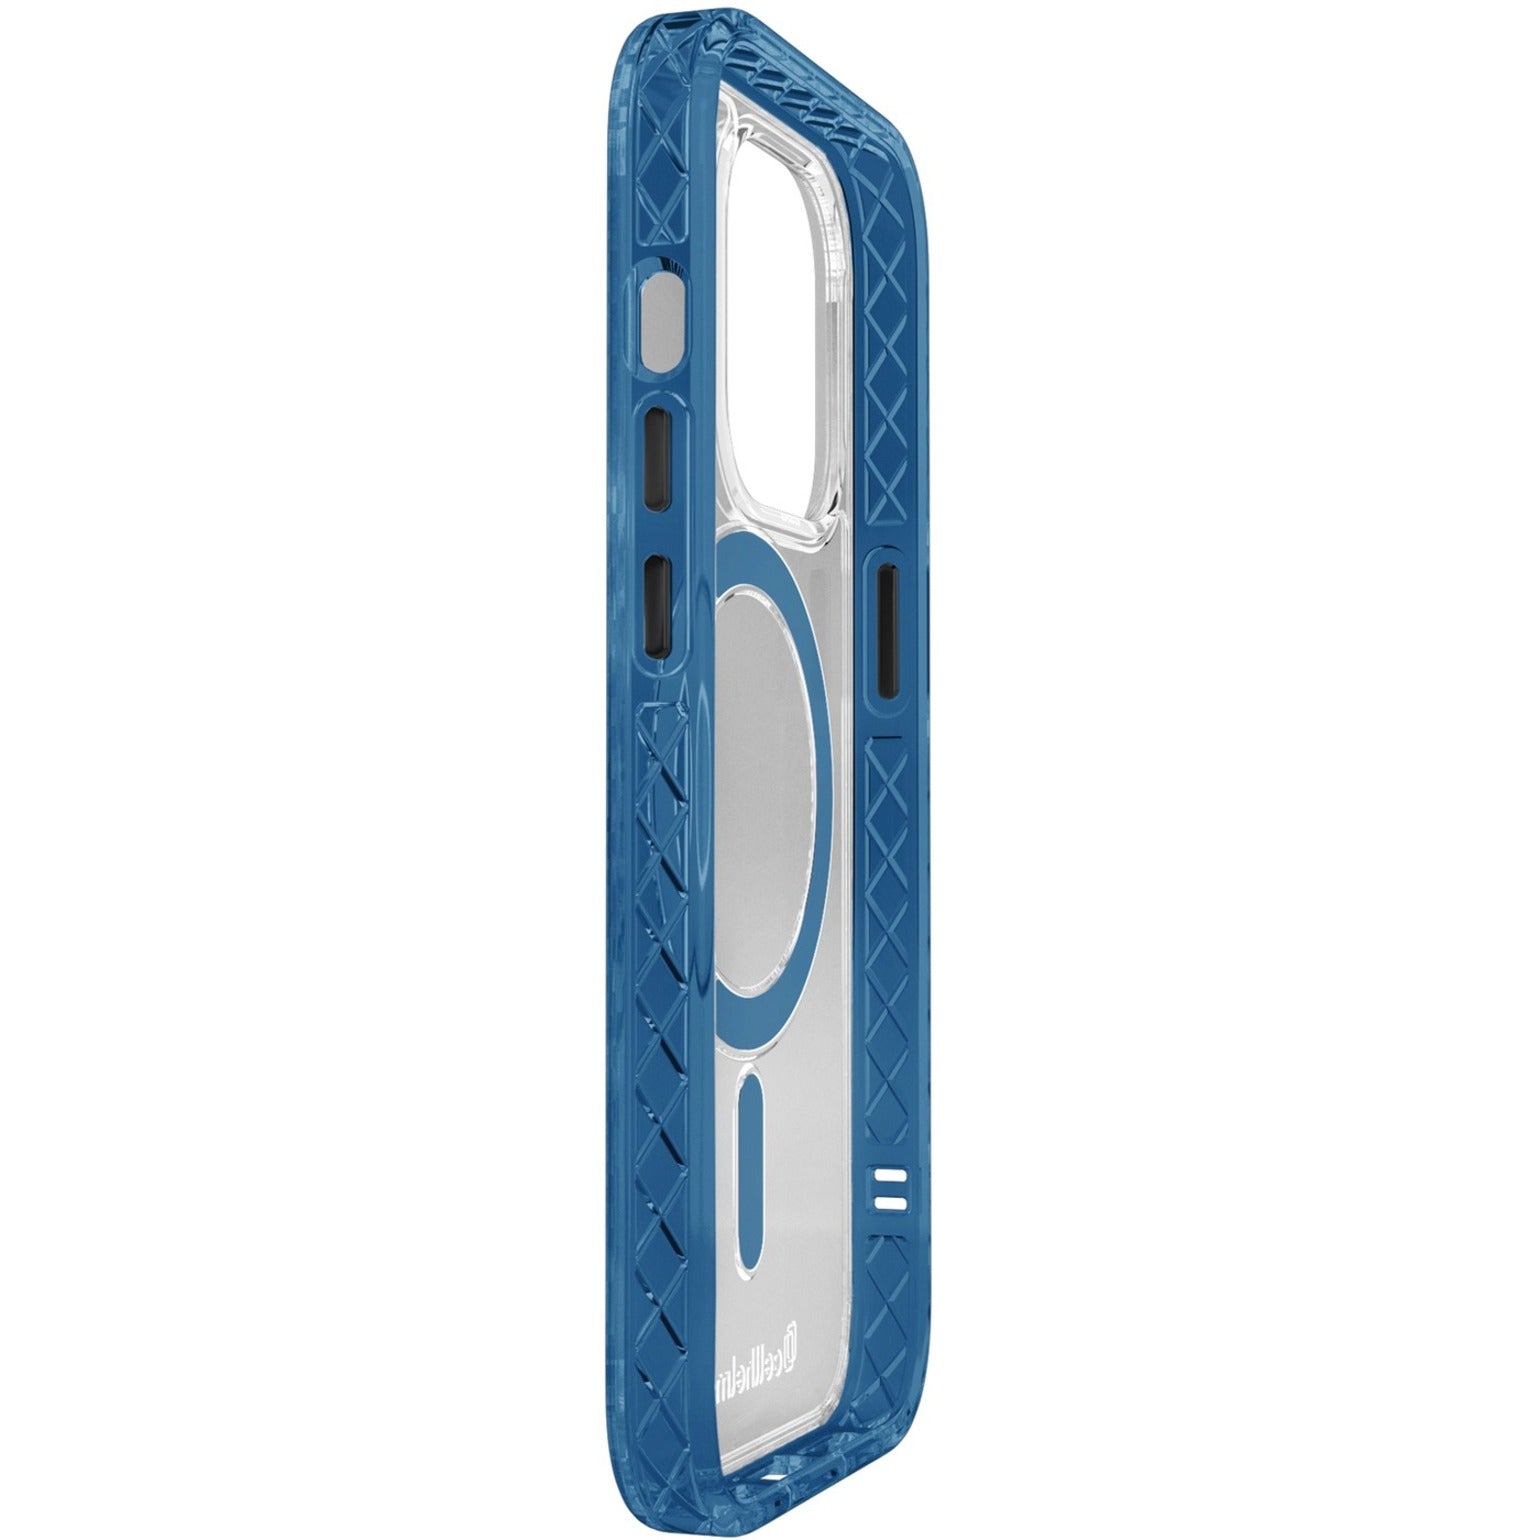 Cellhelmet Magnitude Pro Smartphone Case - Deep Sea Blue [Discontinued]